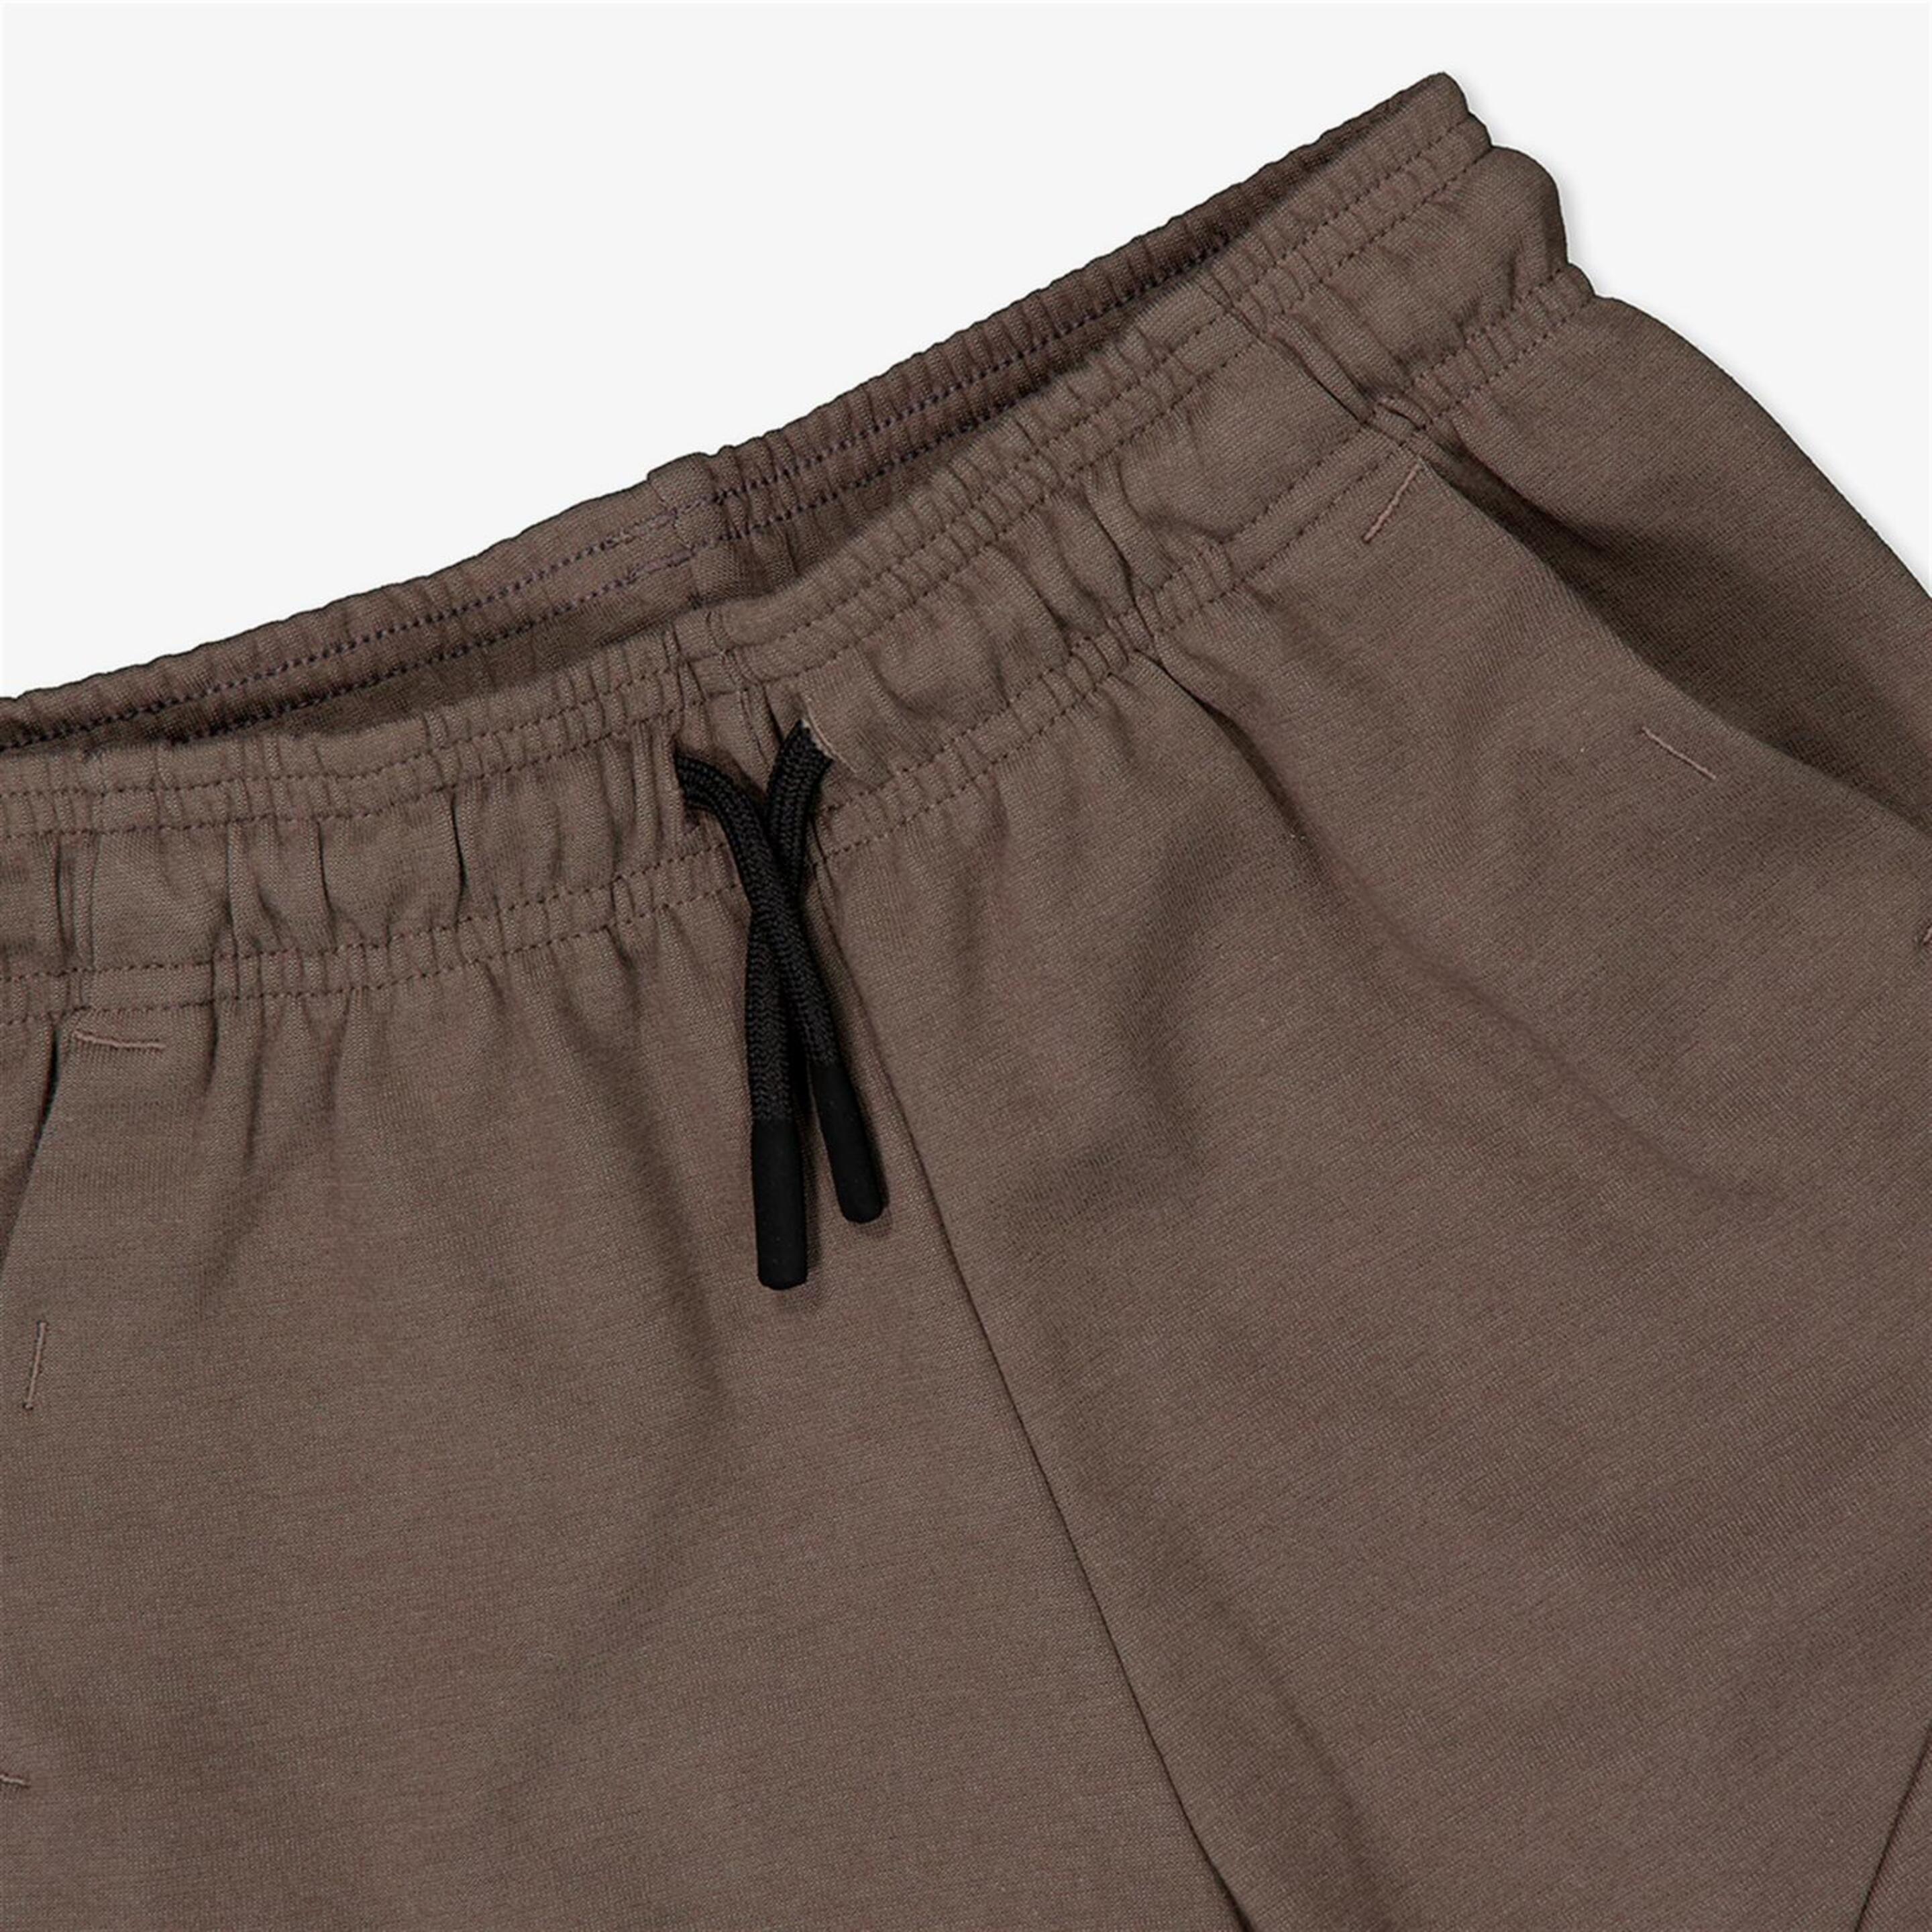 Pantalón Corto adidas  - Marrón - Bermuda Niño